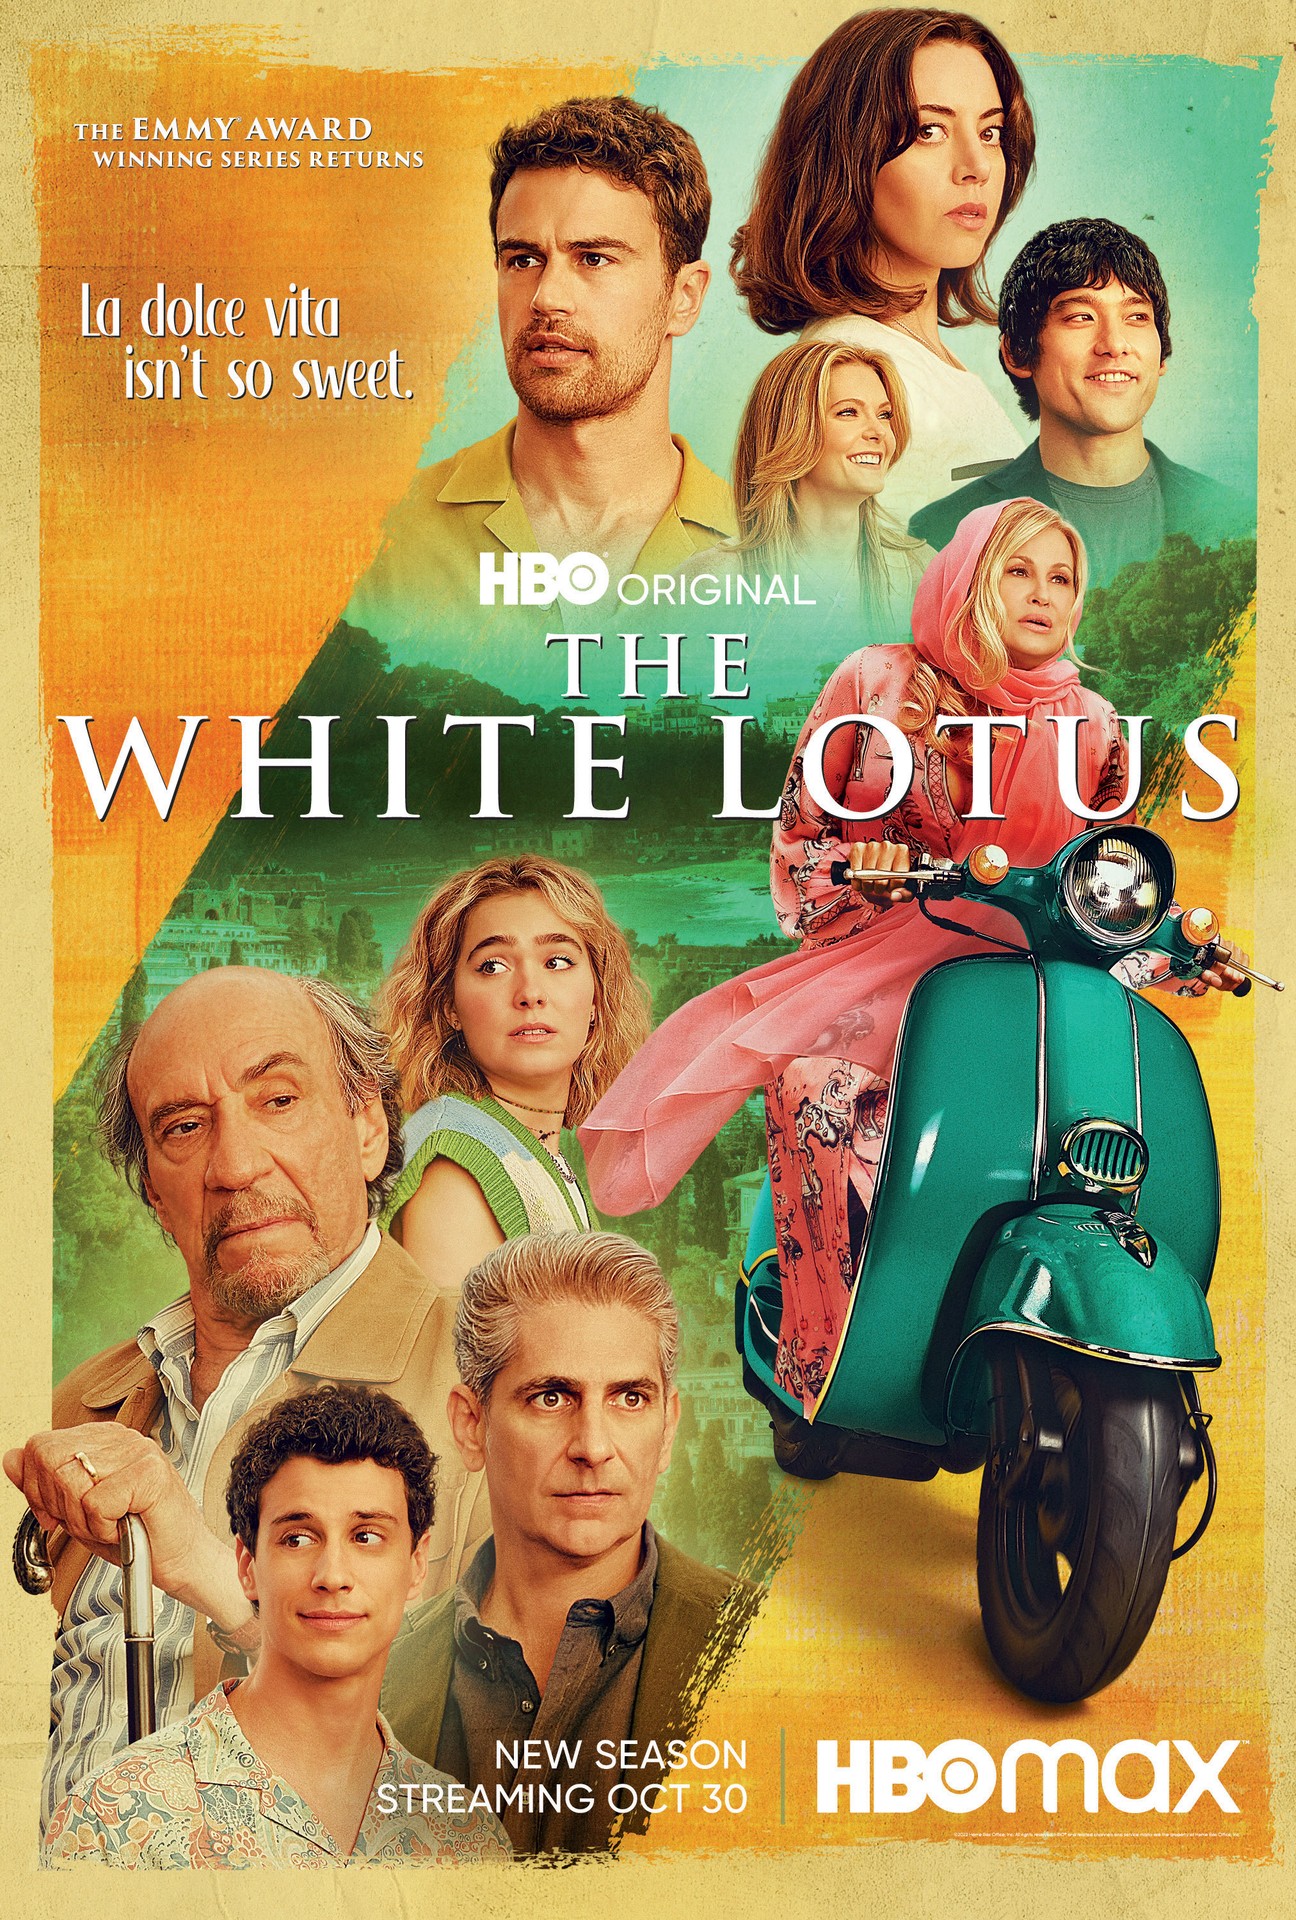 What happens on The White Lotus season 2 finale?